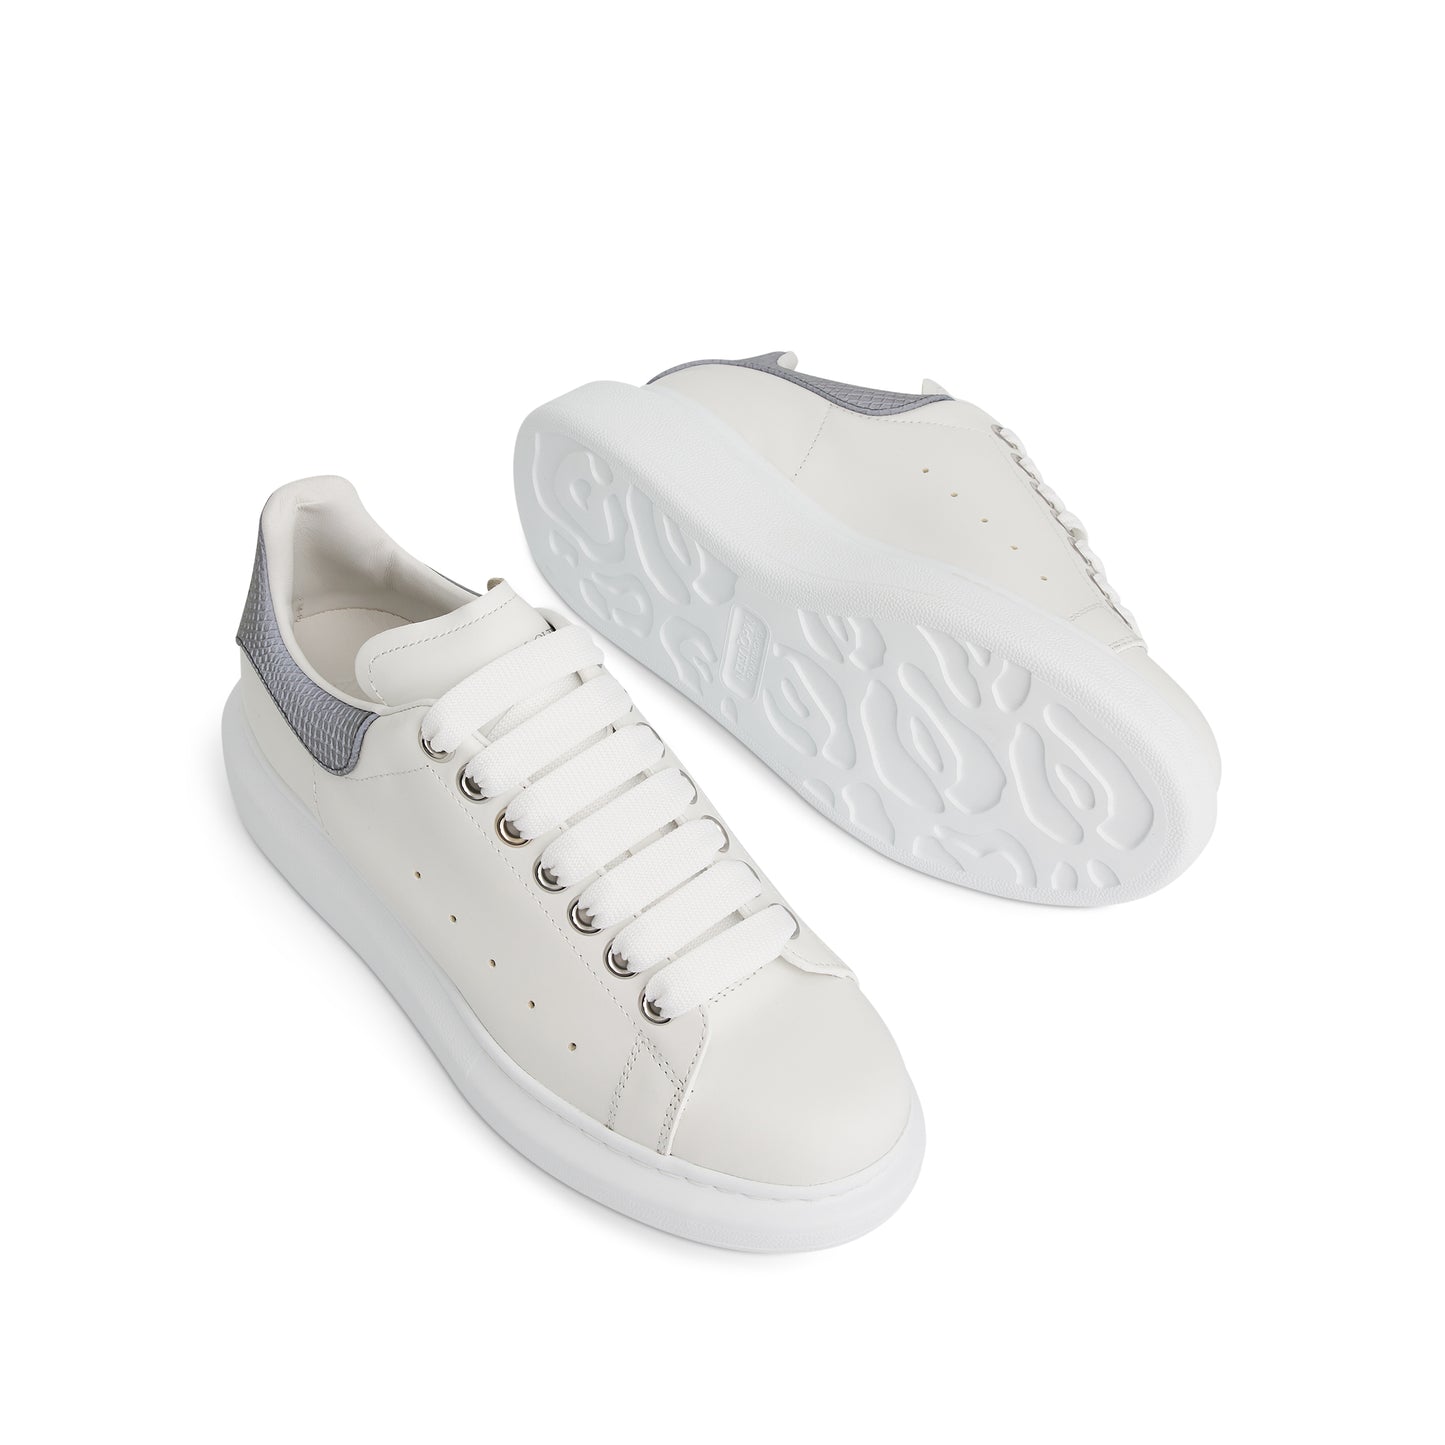 Larry Oversized Sneaker in White/Cement Grey